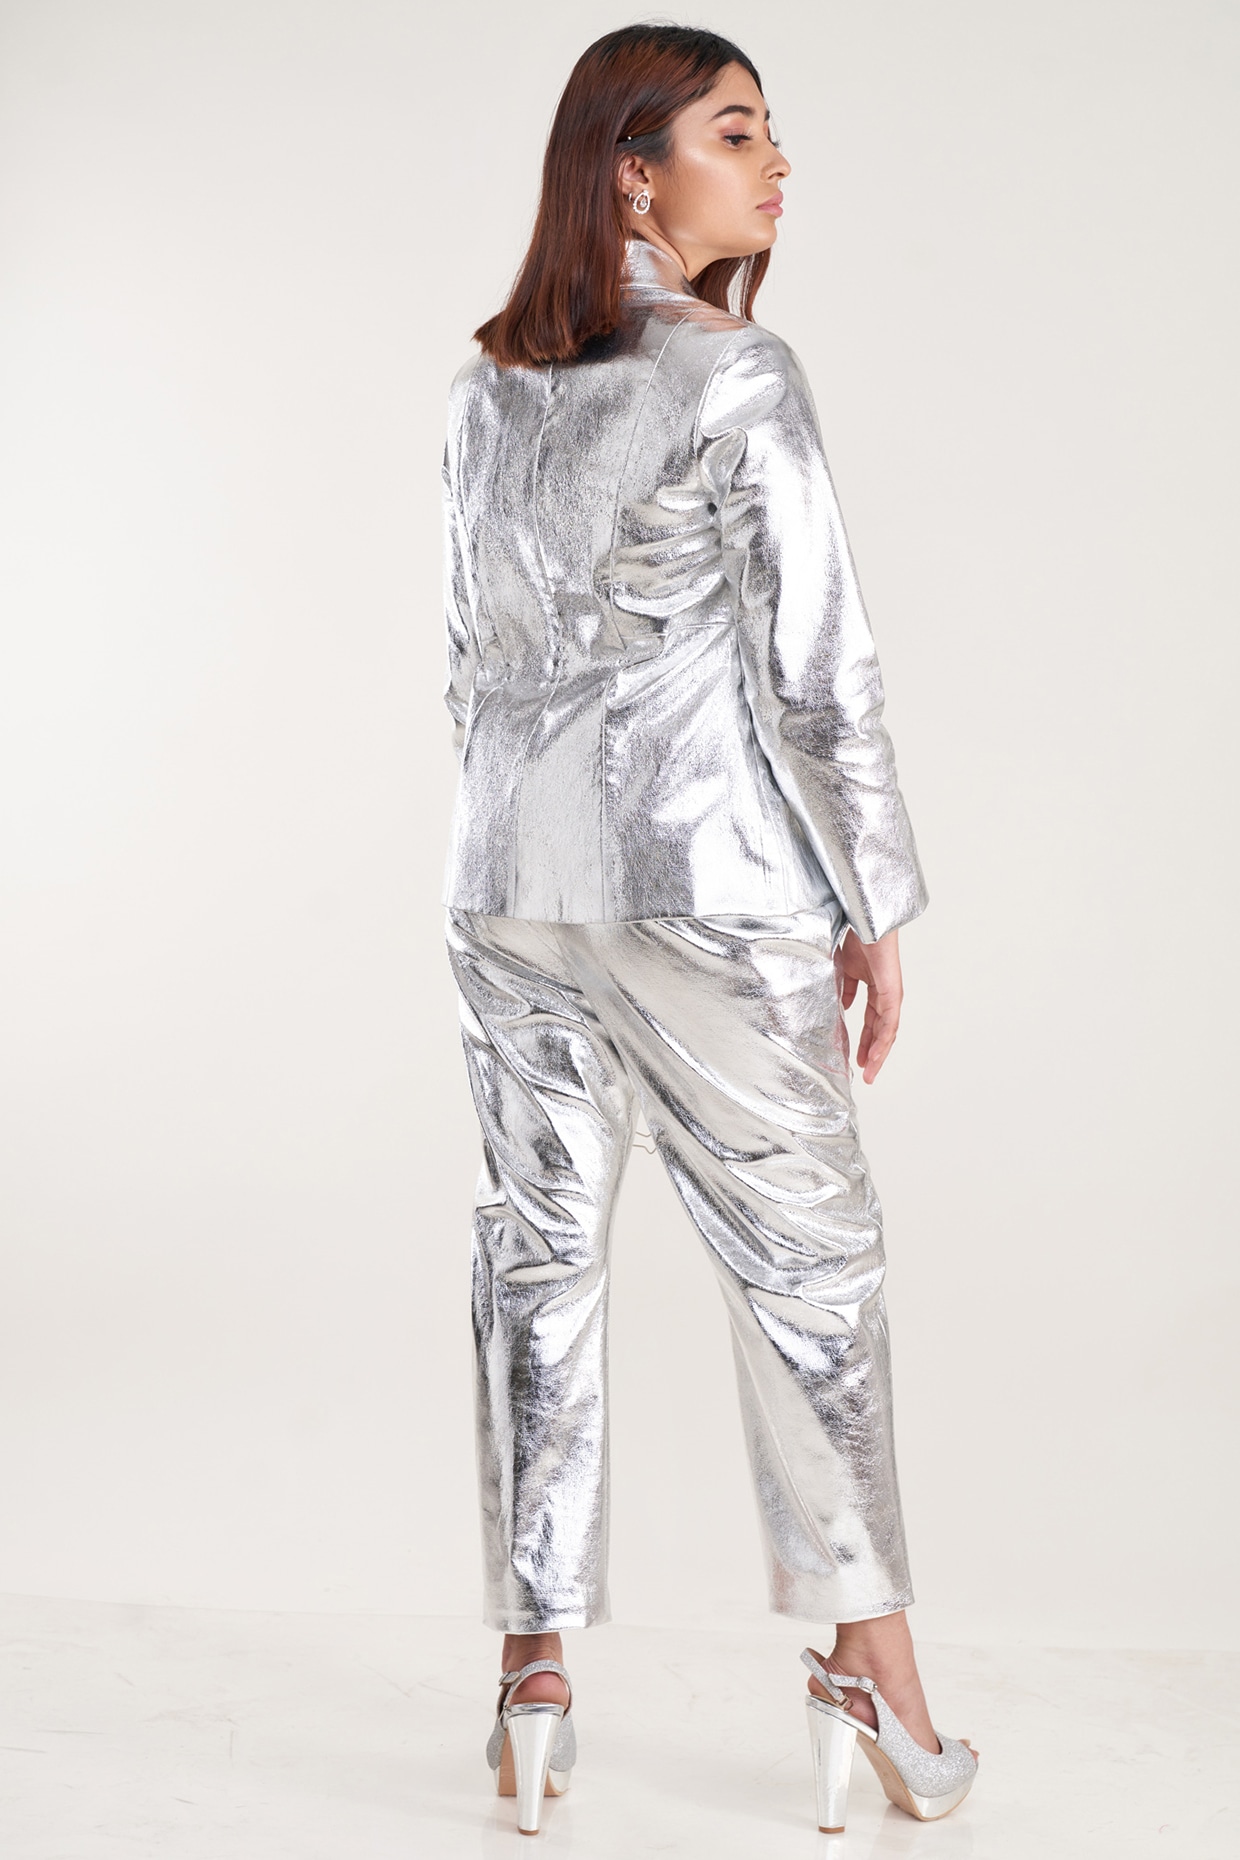 Reclaimed Vintage inspired suit trousers in silver metallic  ASOS